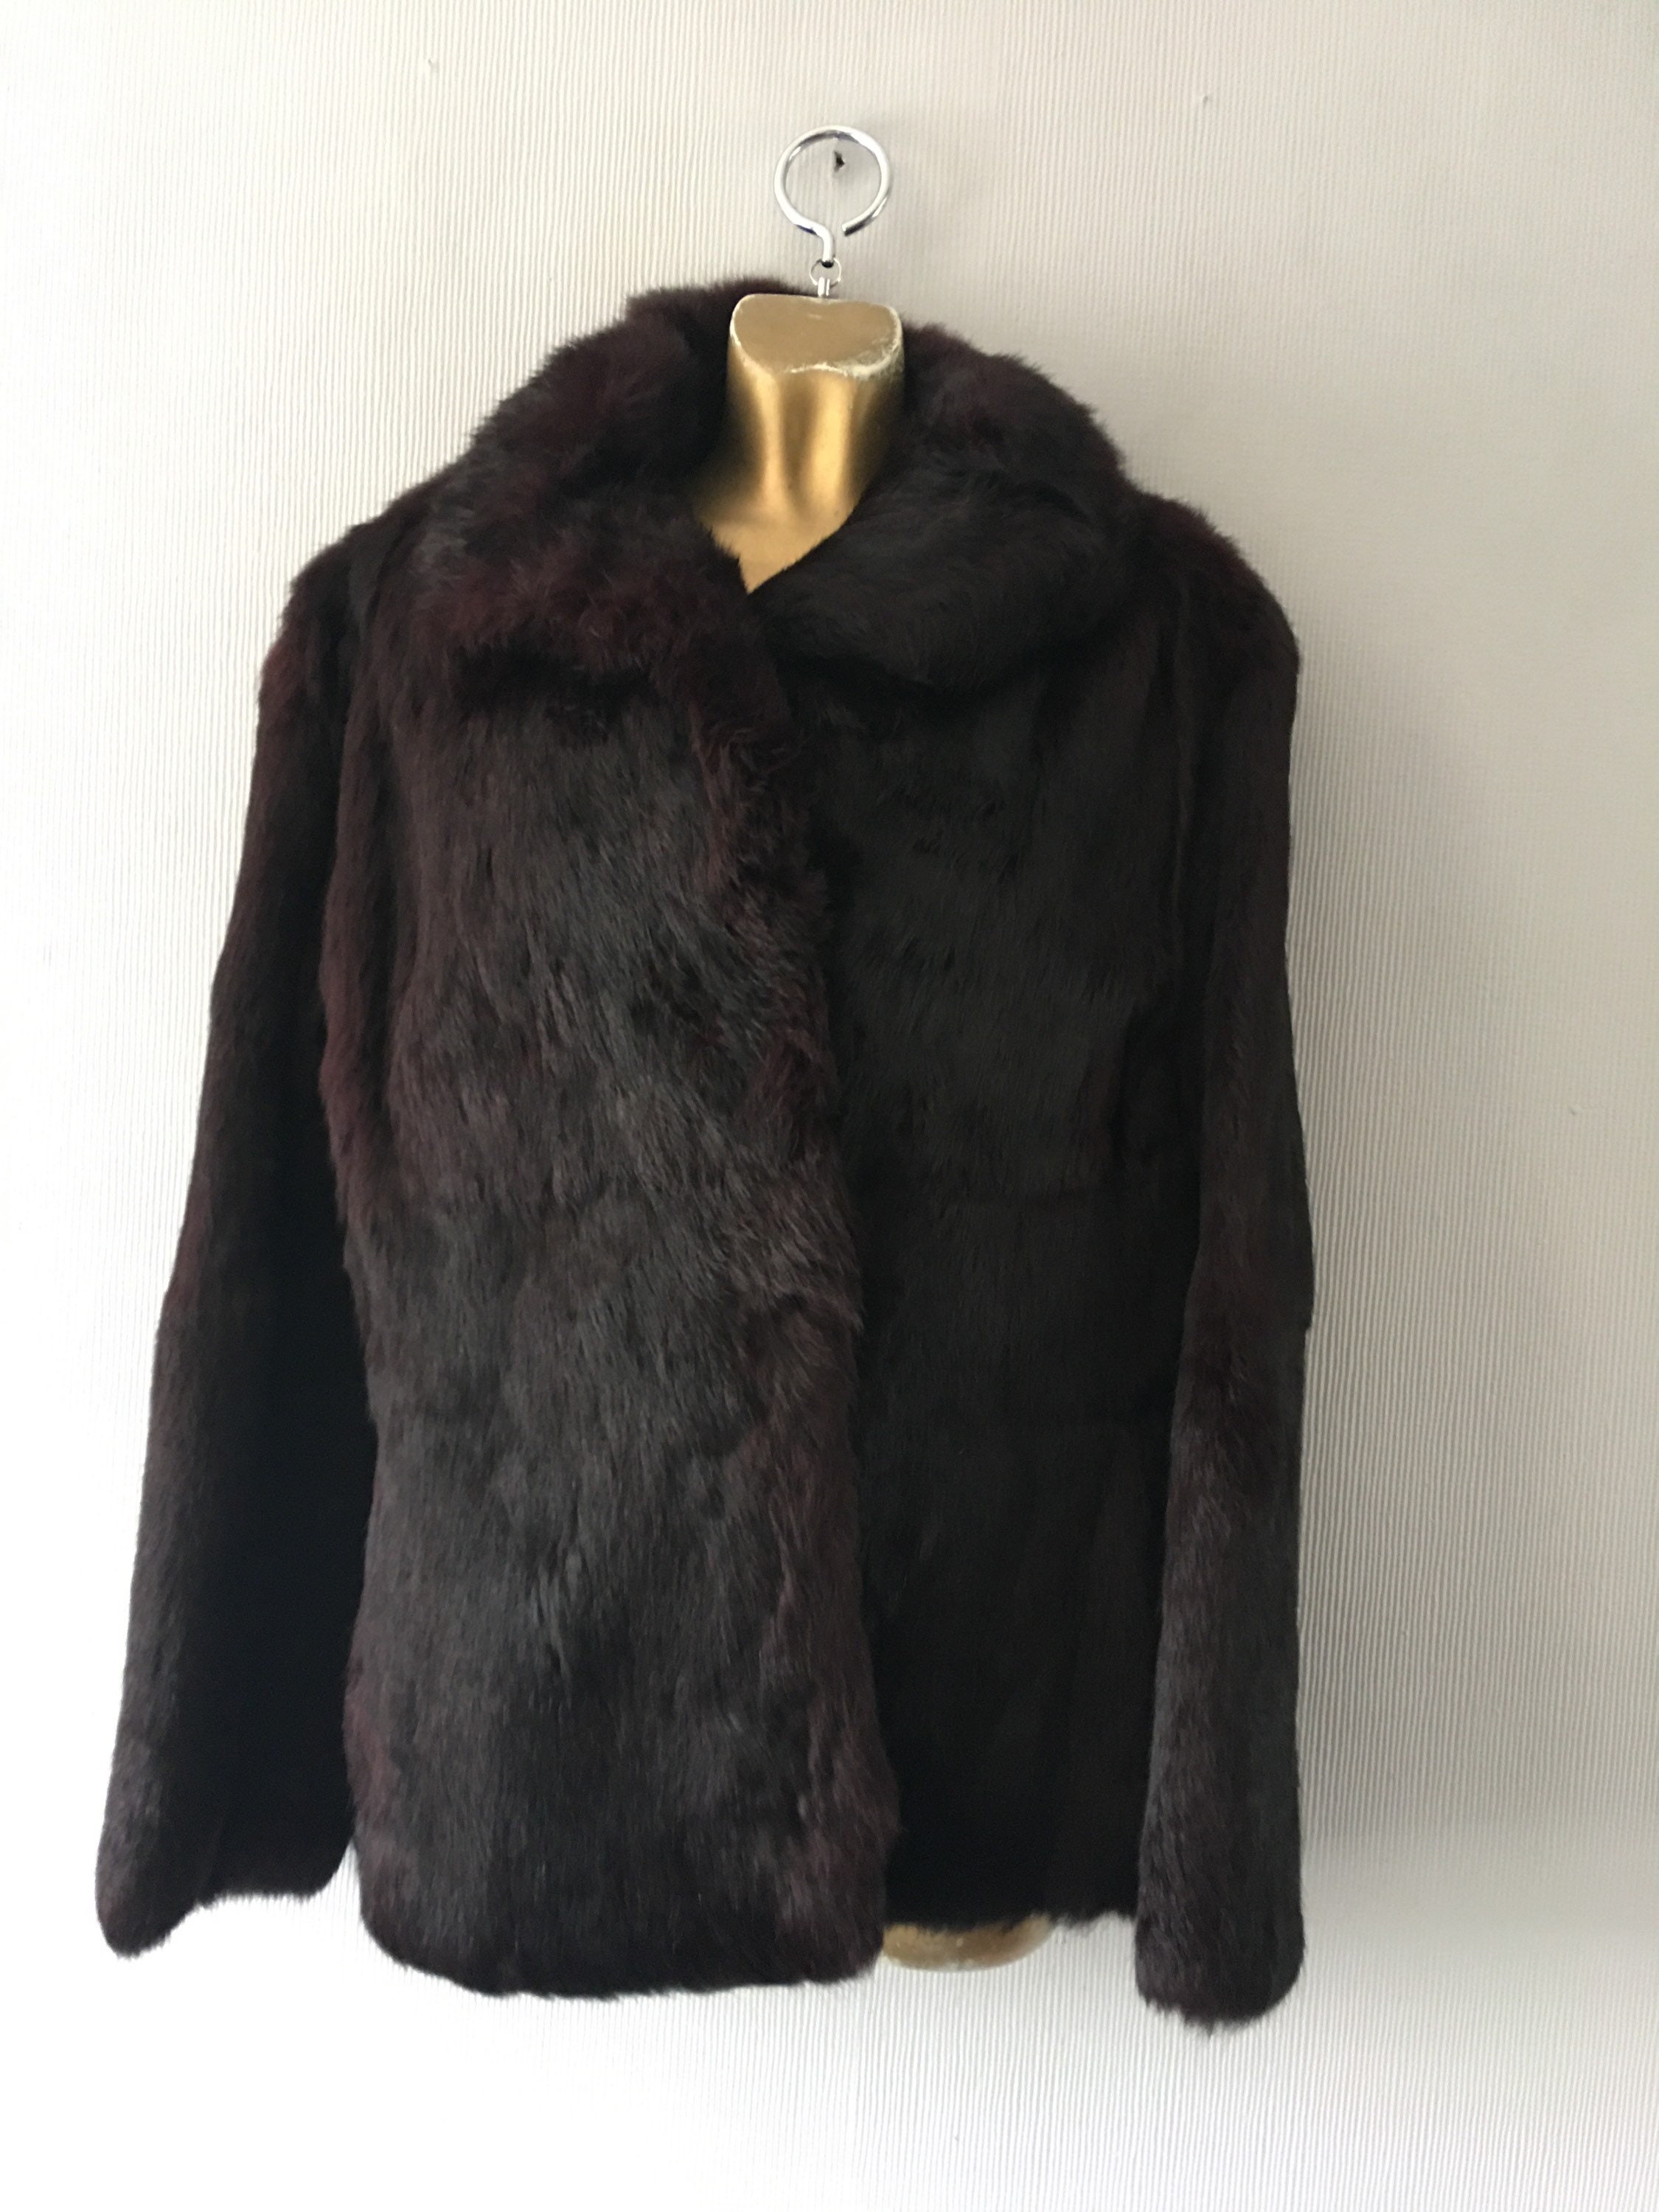 Vintage real fur coney skin jacket size UK 12 | Etsy